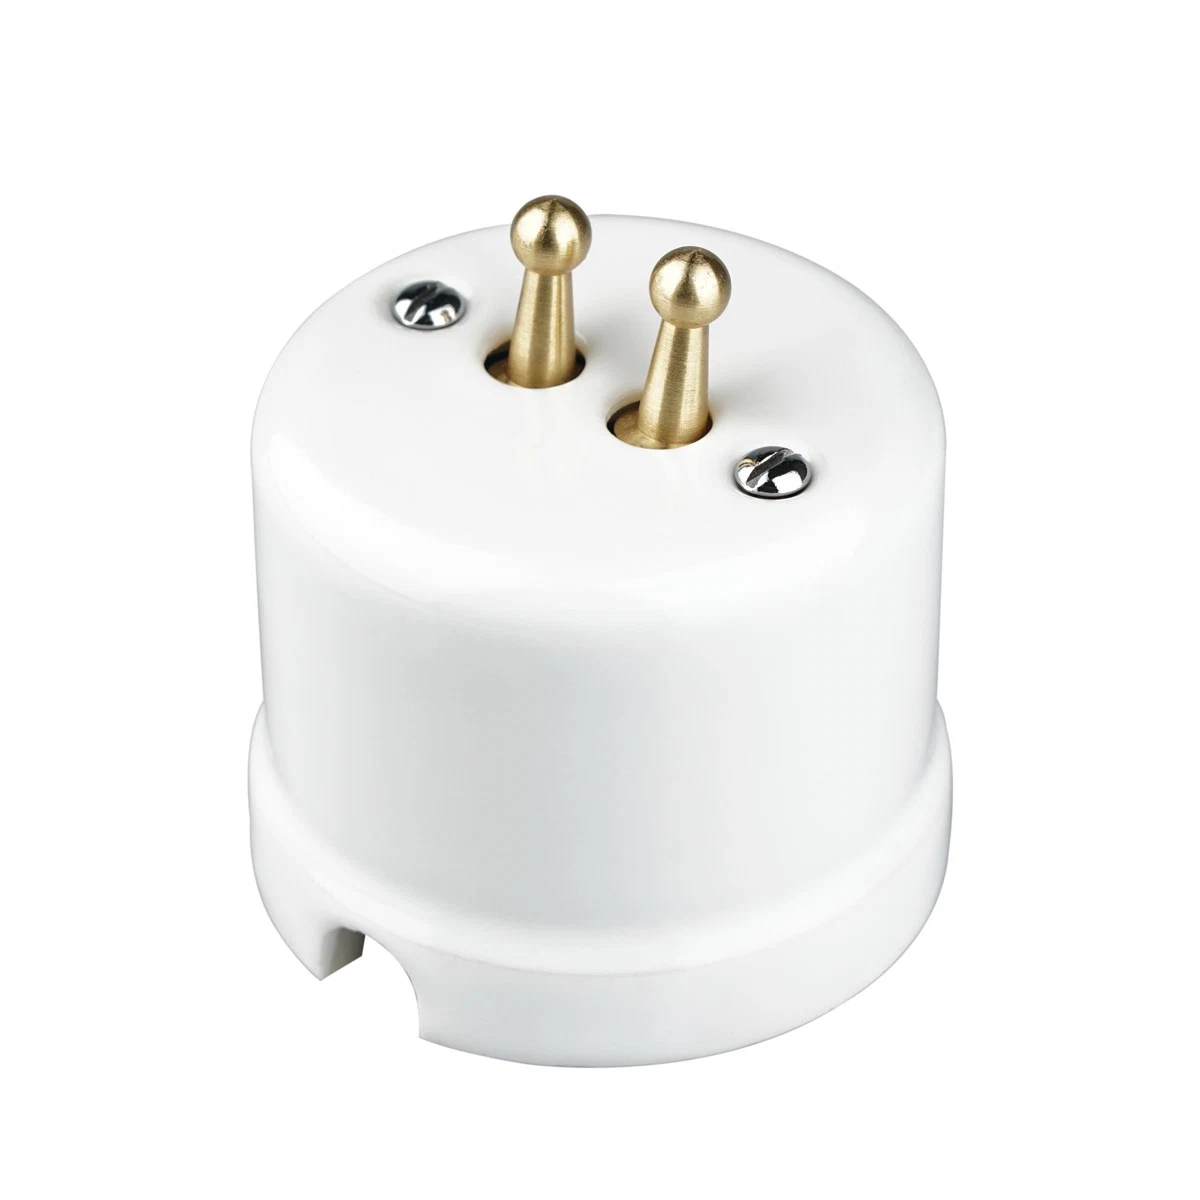 White Ceramic Toggle Light Switches for European Market